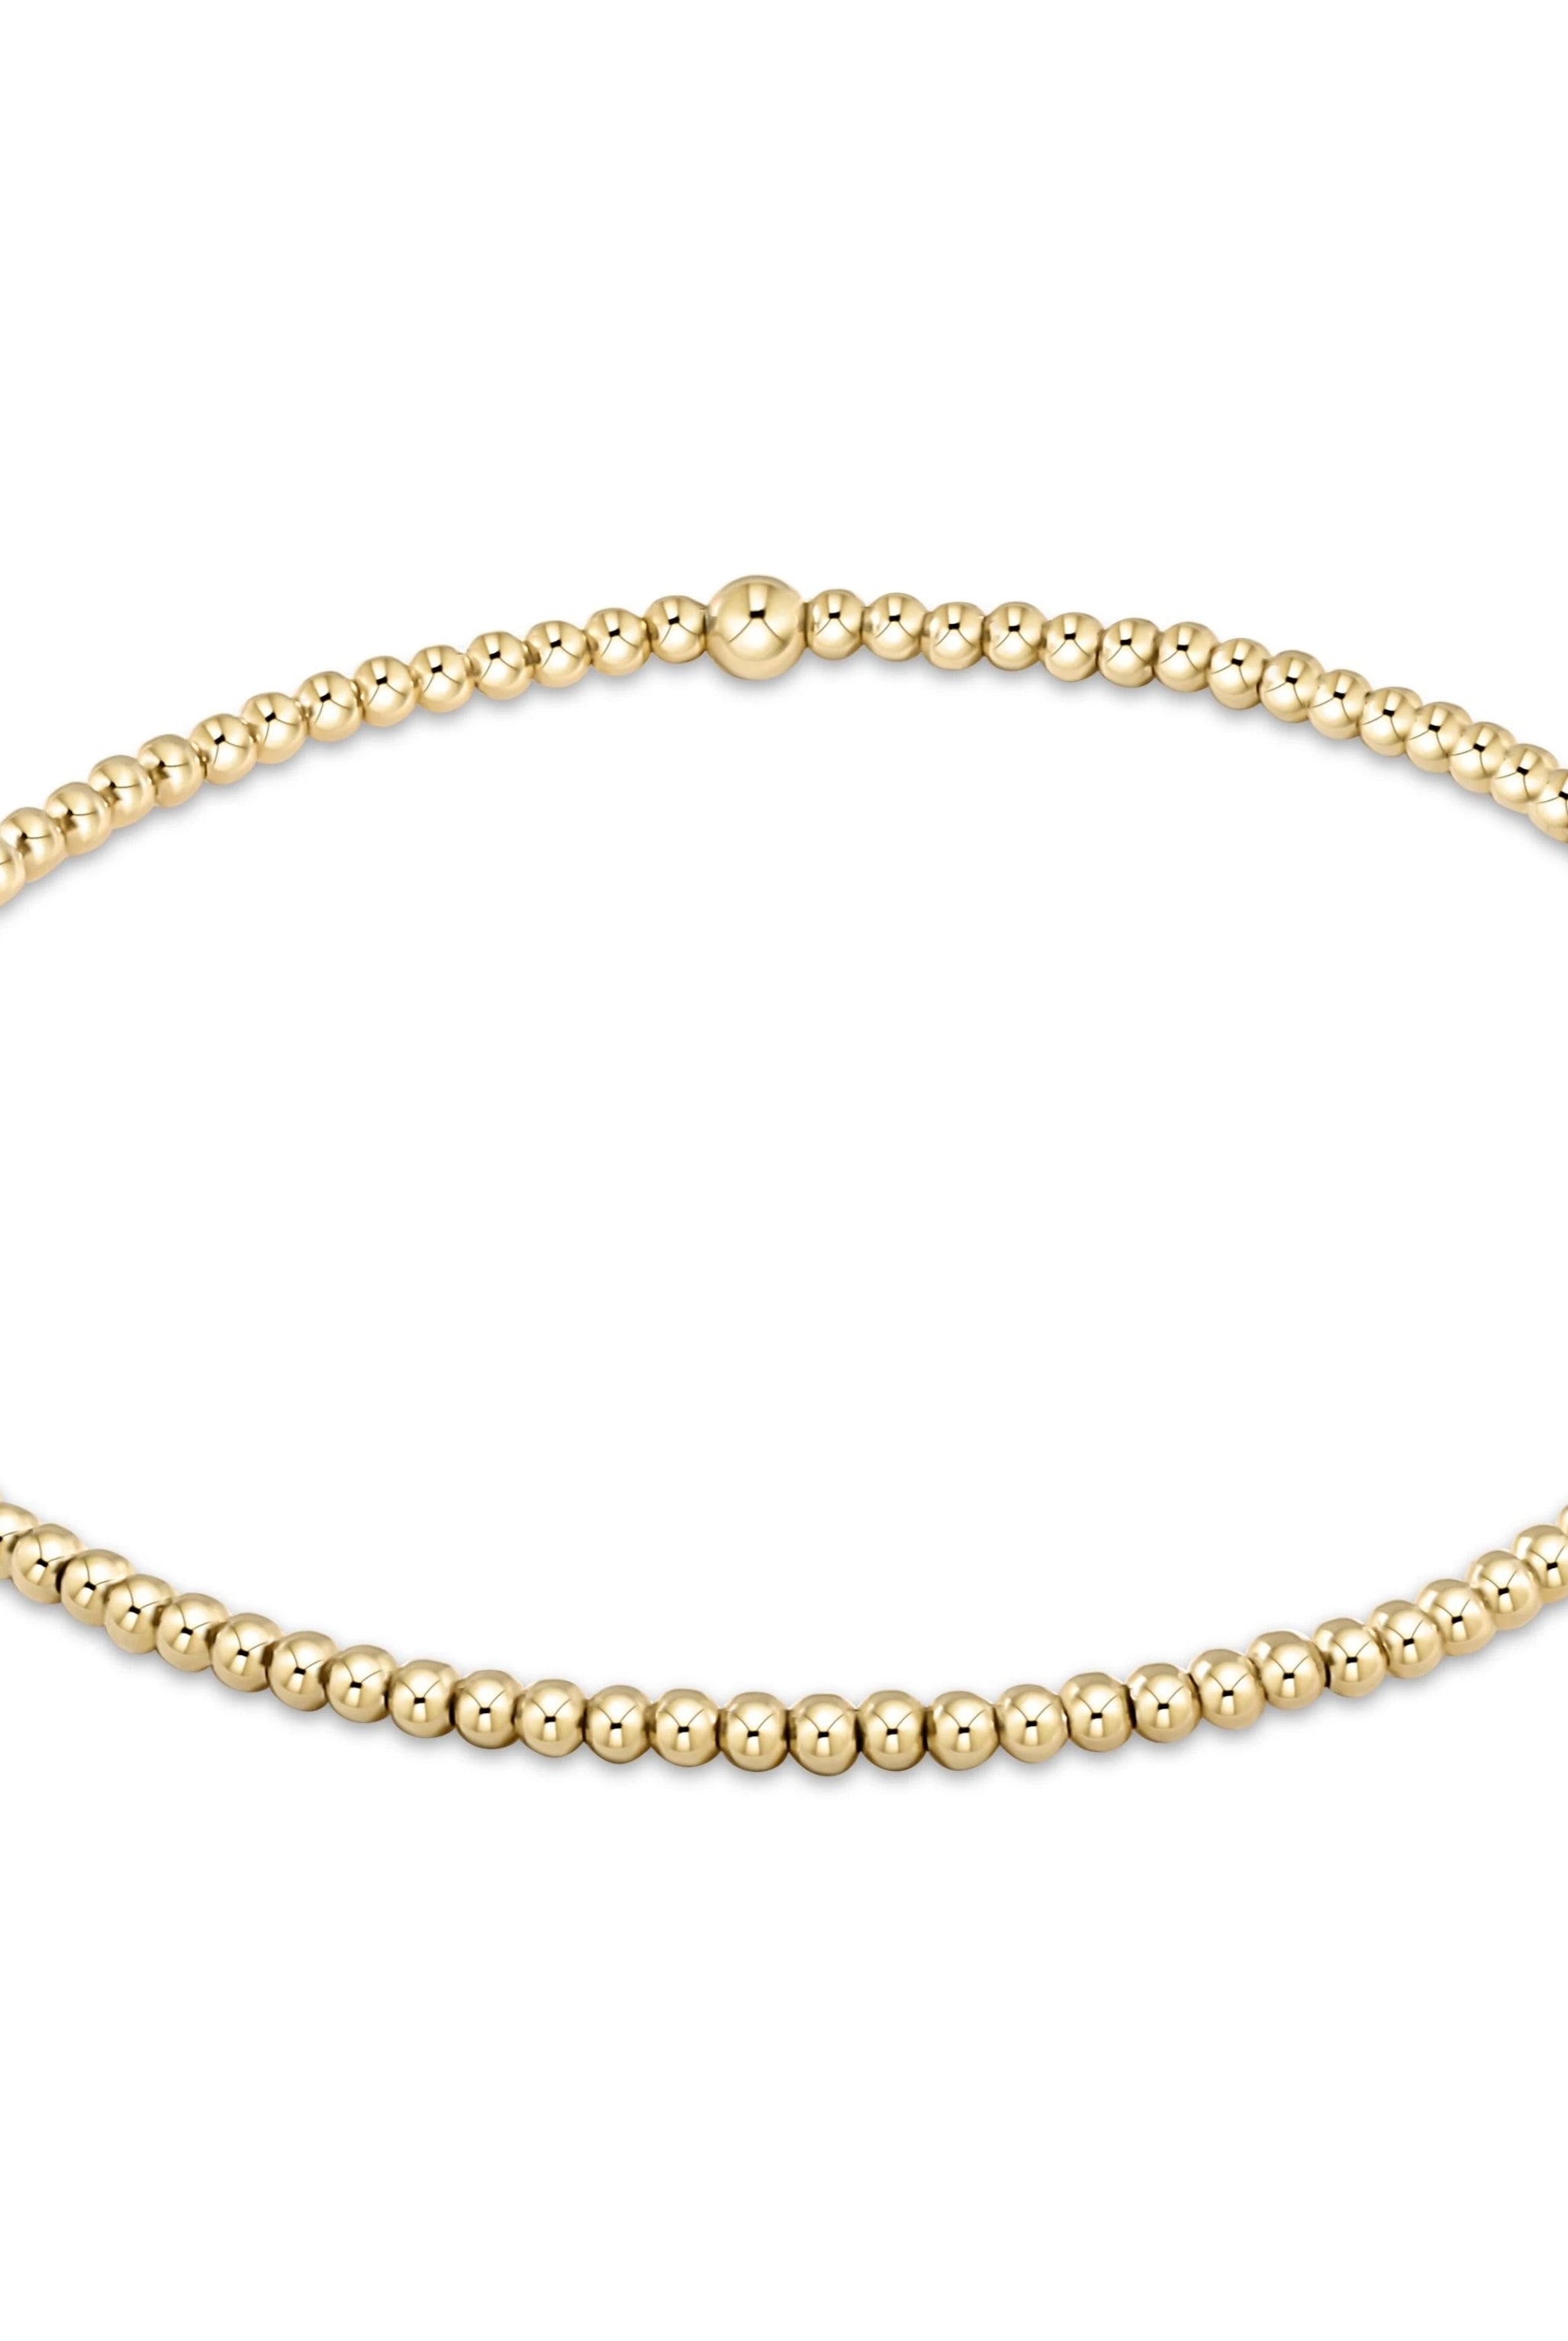 Classic Gold 2mm Bracelet-Bracelets-eNewton-The Lovely Closet, Women's Fashion Boutique in Alexandria, KY